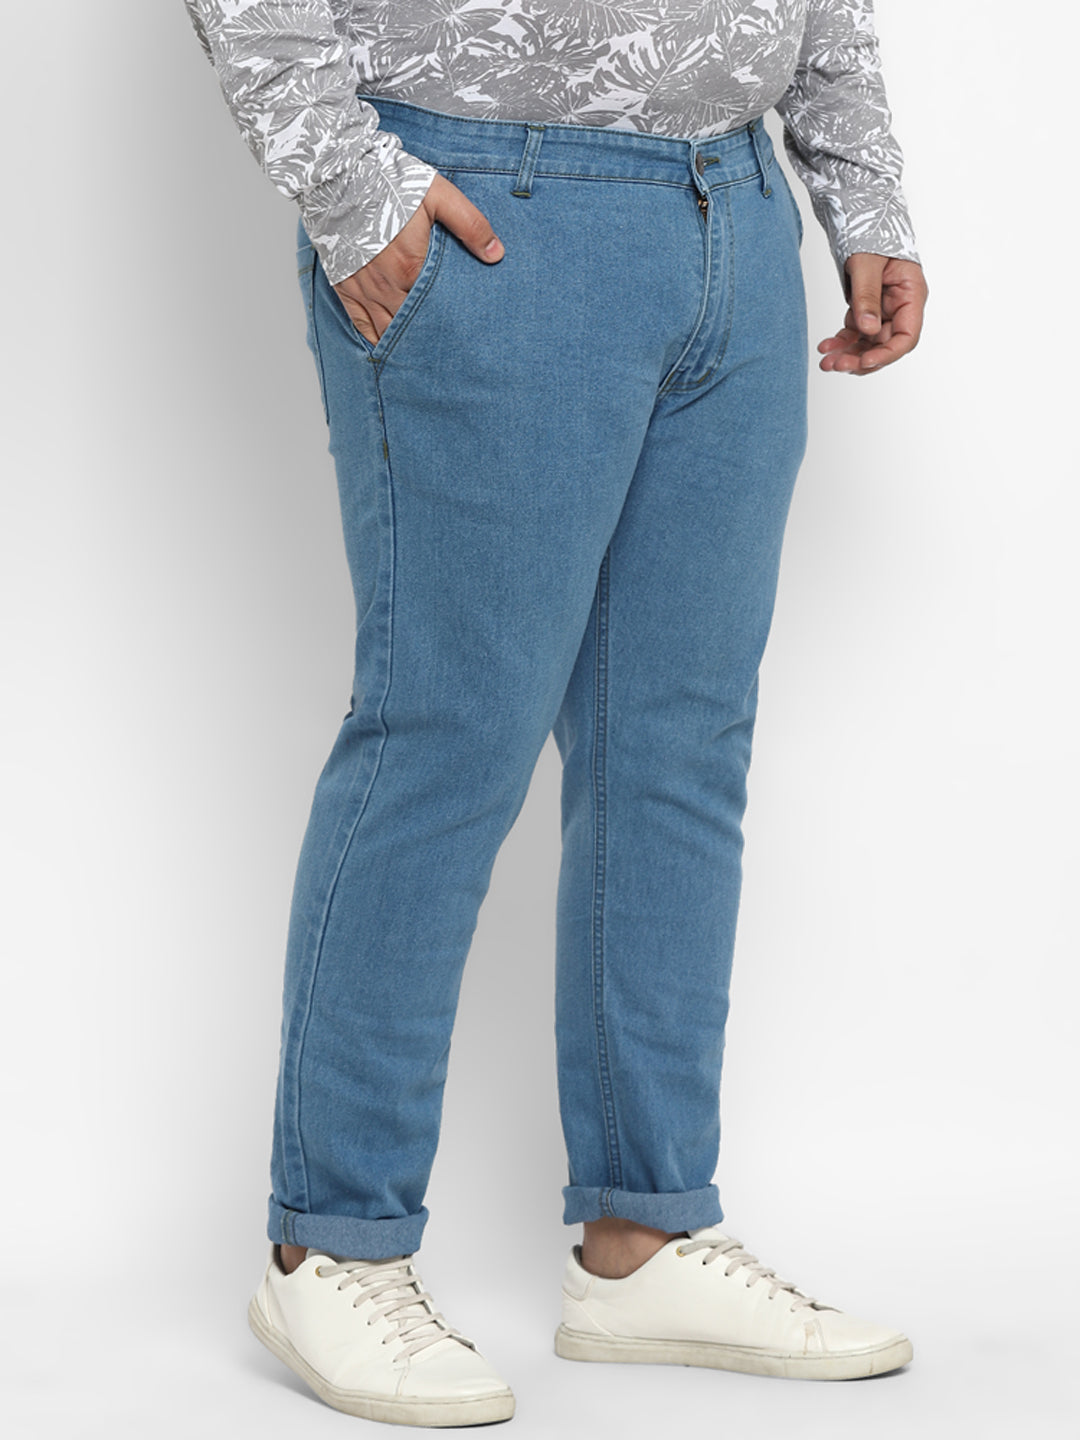 Urbano Plus Men's Light Blue Regular Fit Washed Jeans Stretchable